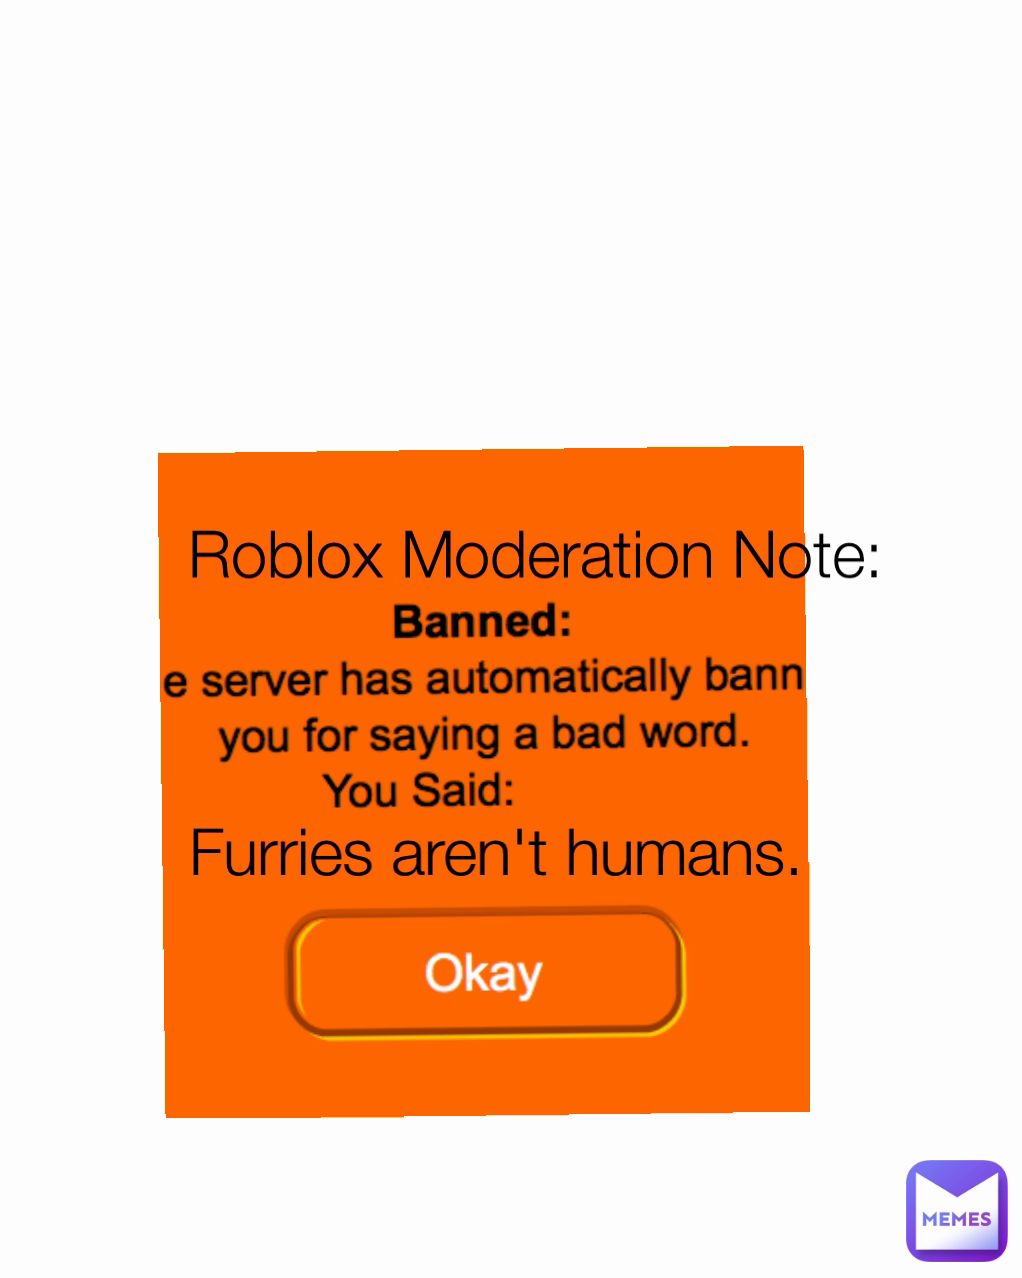 Roblox Moderation Note: Furries aren't humans. | @LambSauce50 | Memes